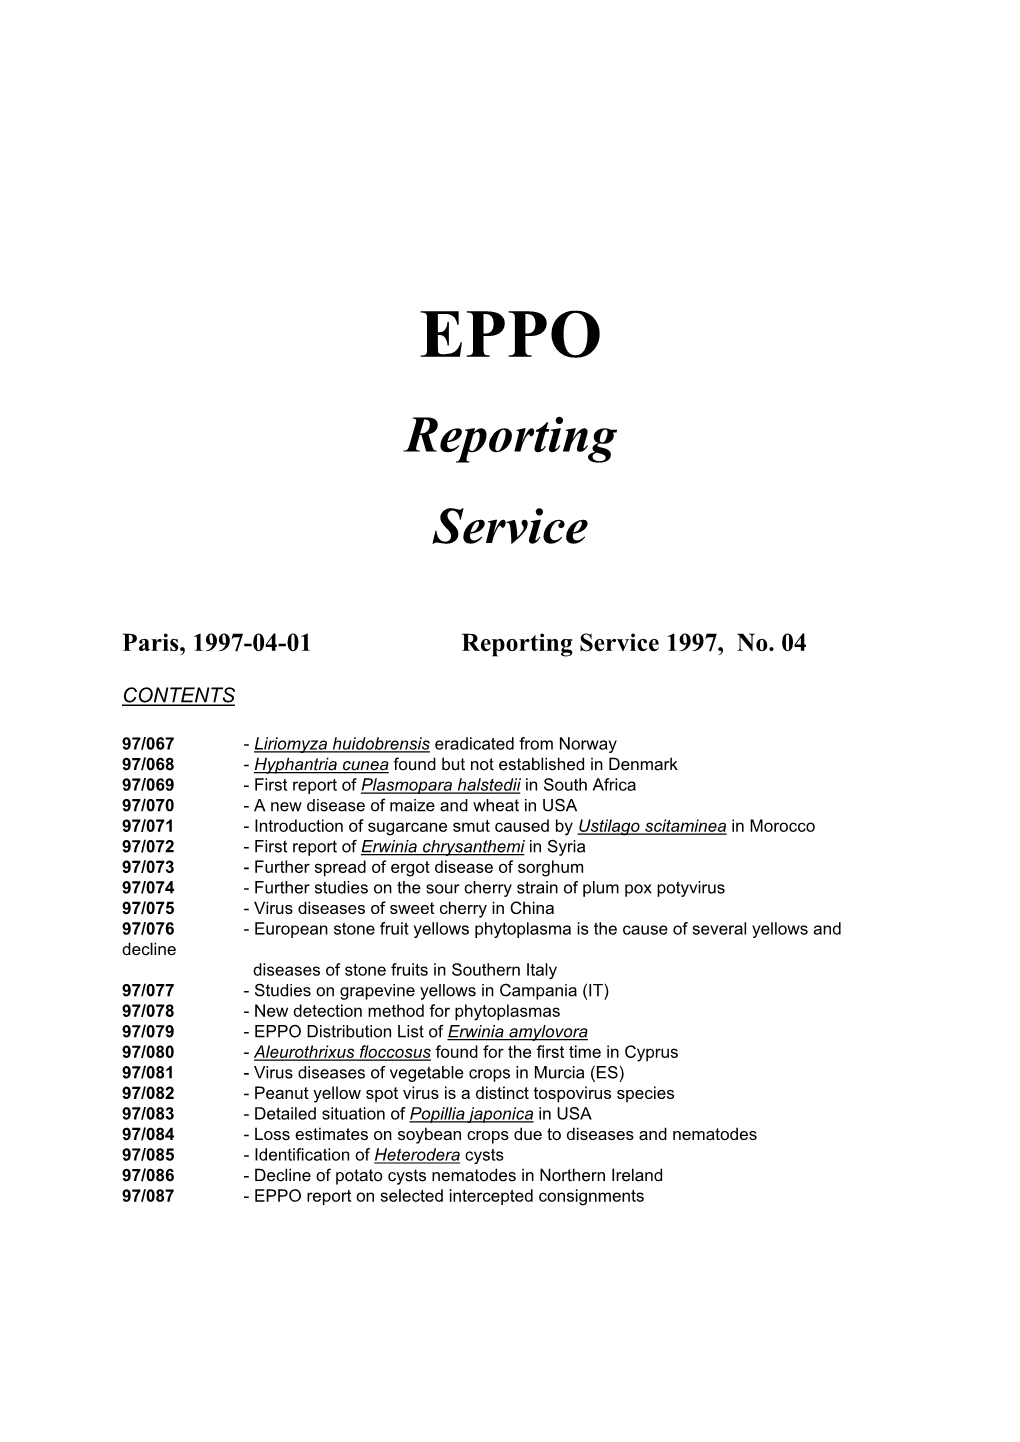 Reporting Service 1997, No